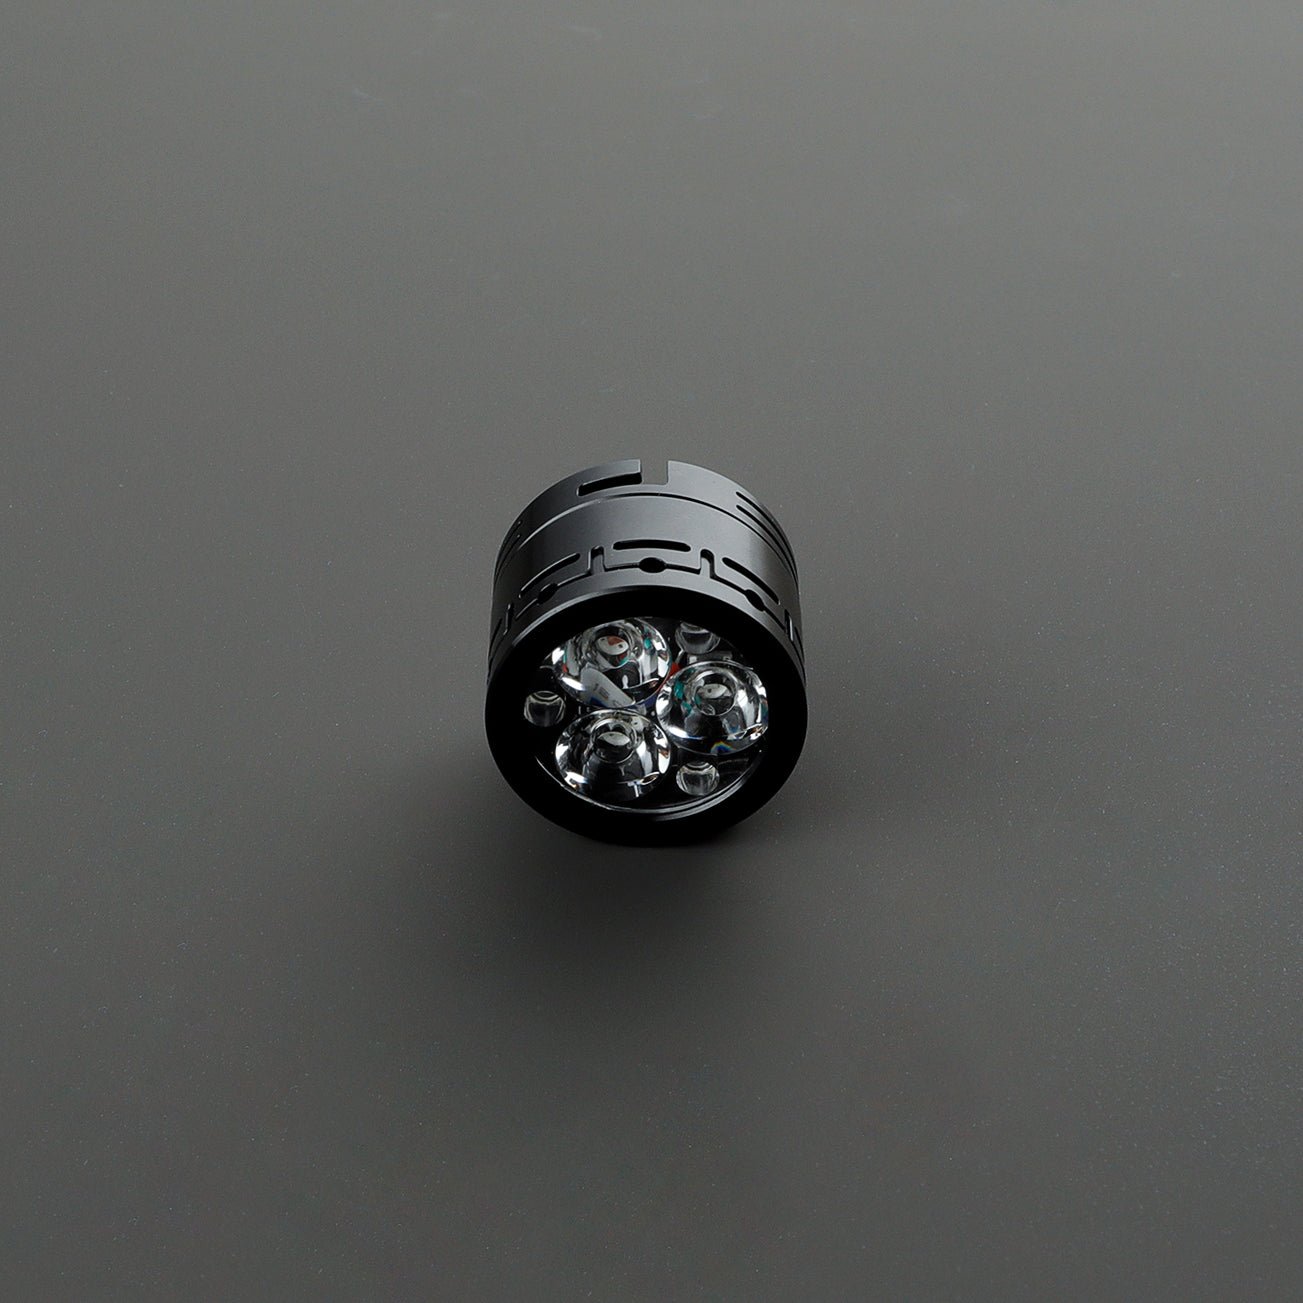 SaberCustom lightsaber accessories pixel to RGB converter adapter variant